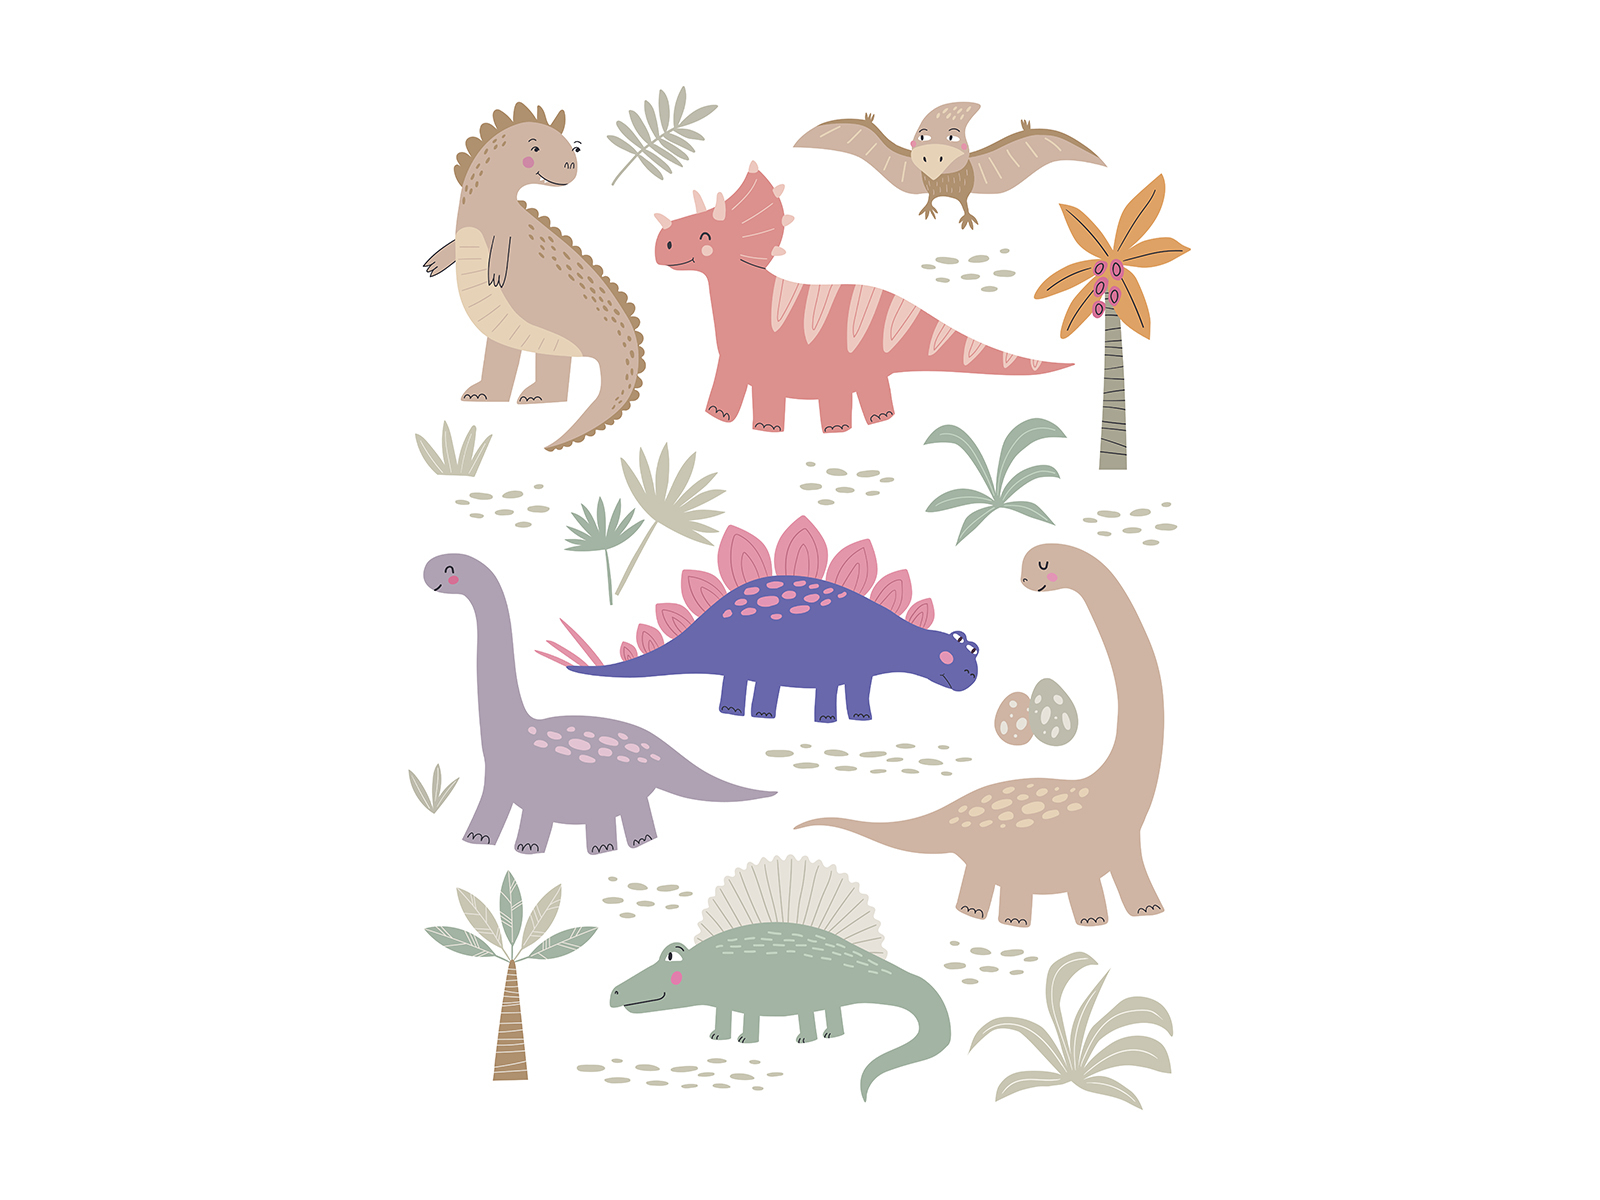 Dinosaurs illustration by Nadezhda Mikhailova on Dribbble